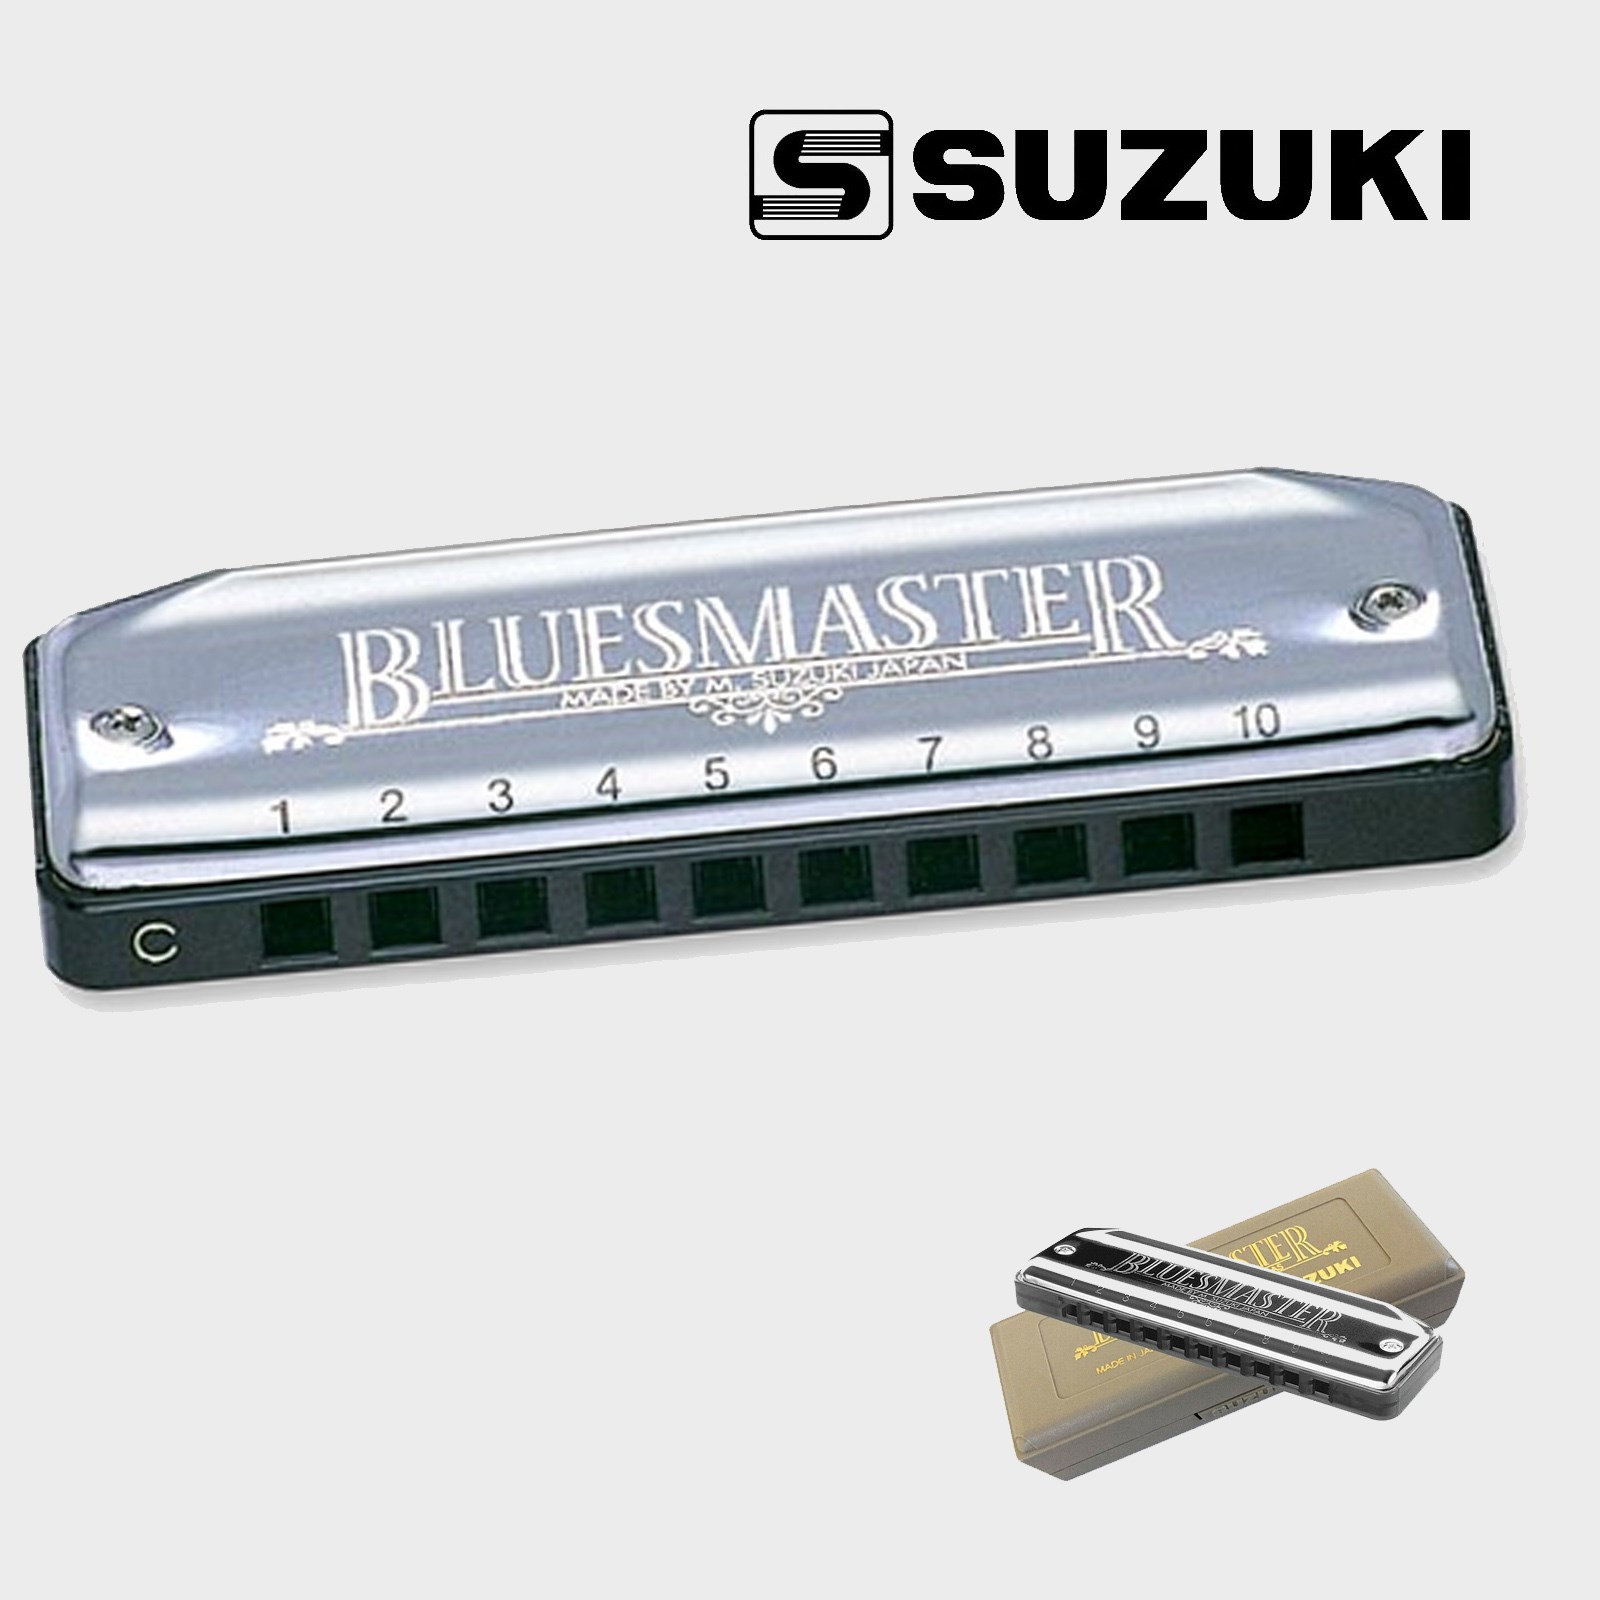 suzuki bluesmaster key of E